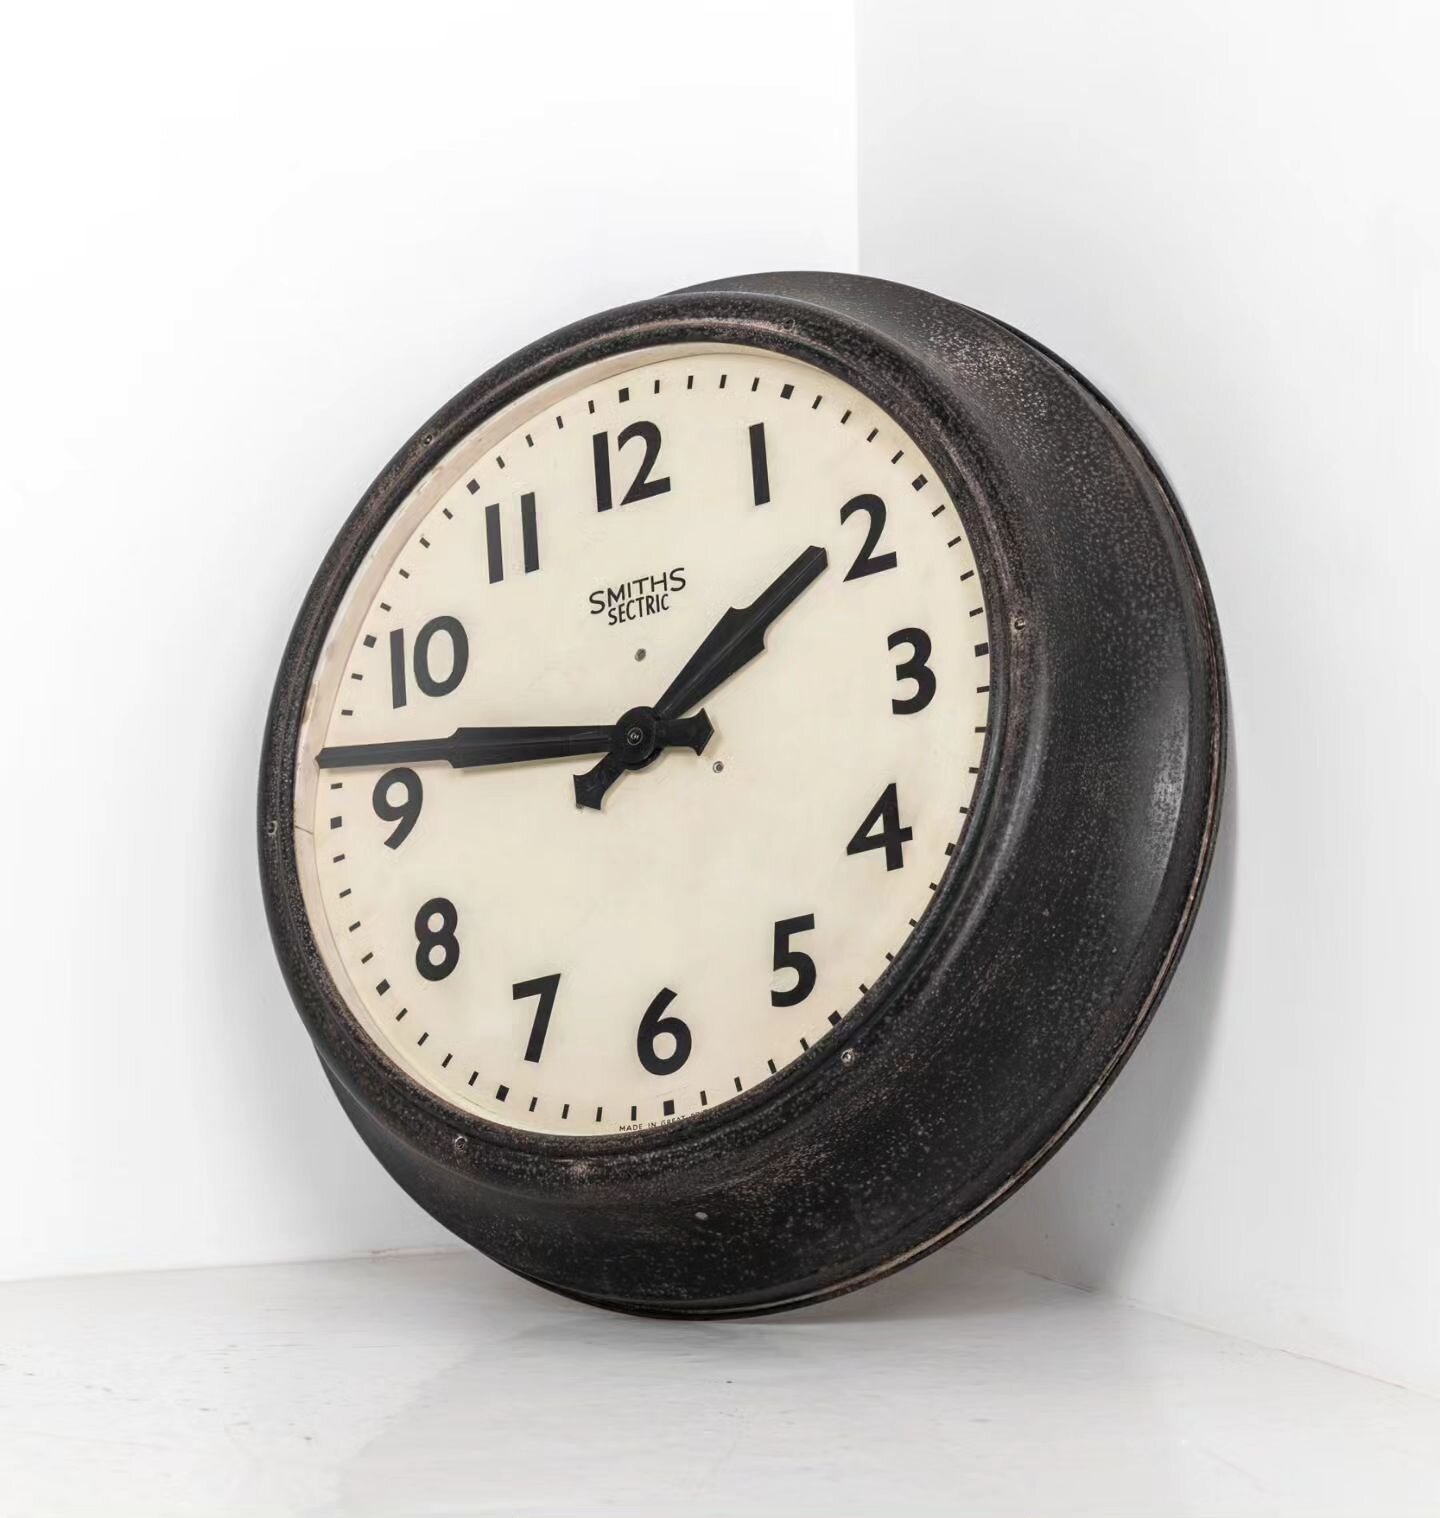 Iconic and large Smiths industrial wall clock 

#antiquesworkshop #smiths #sectric #antiqueclock #retro #vintageclock #horology #slaveclock #clock #interiordesign #decorative #interiorstyling #artdeco #1930s #antiquedealersofinstagram #antiquedealer 